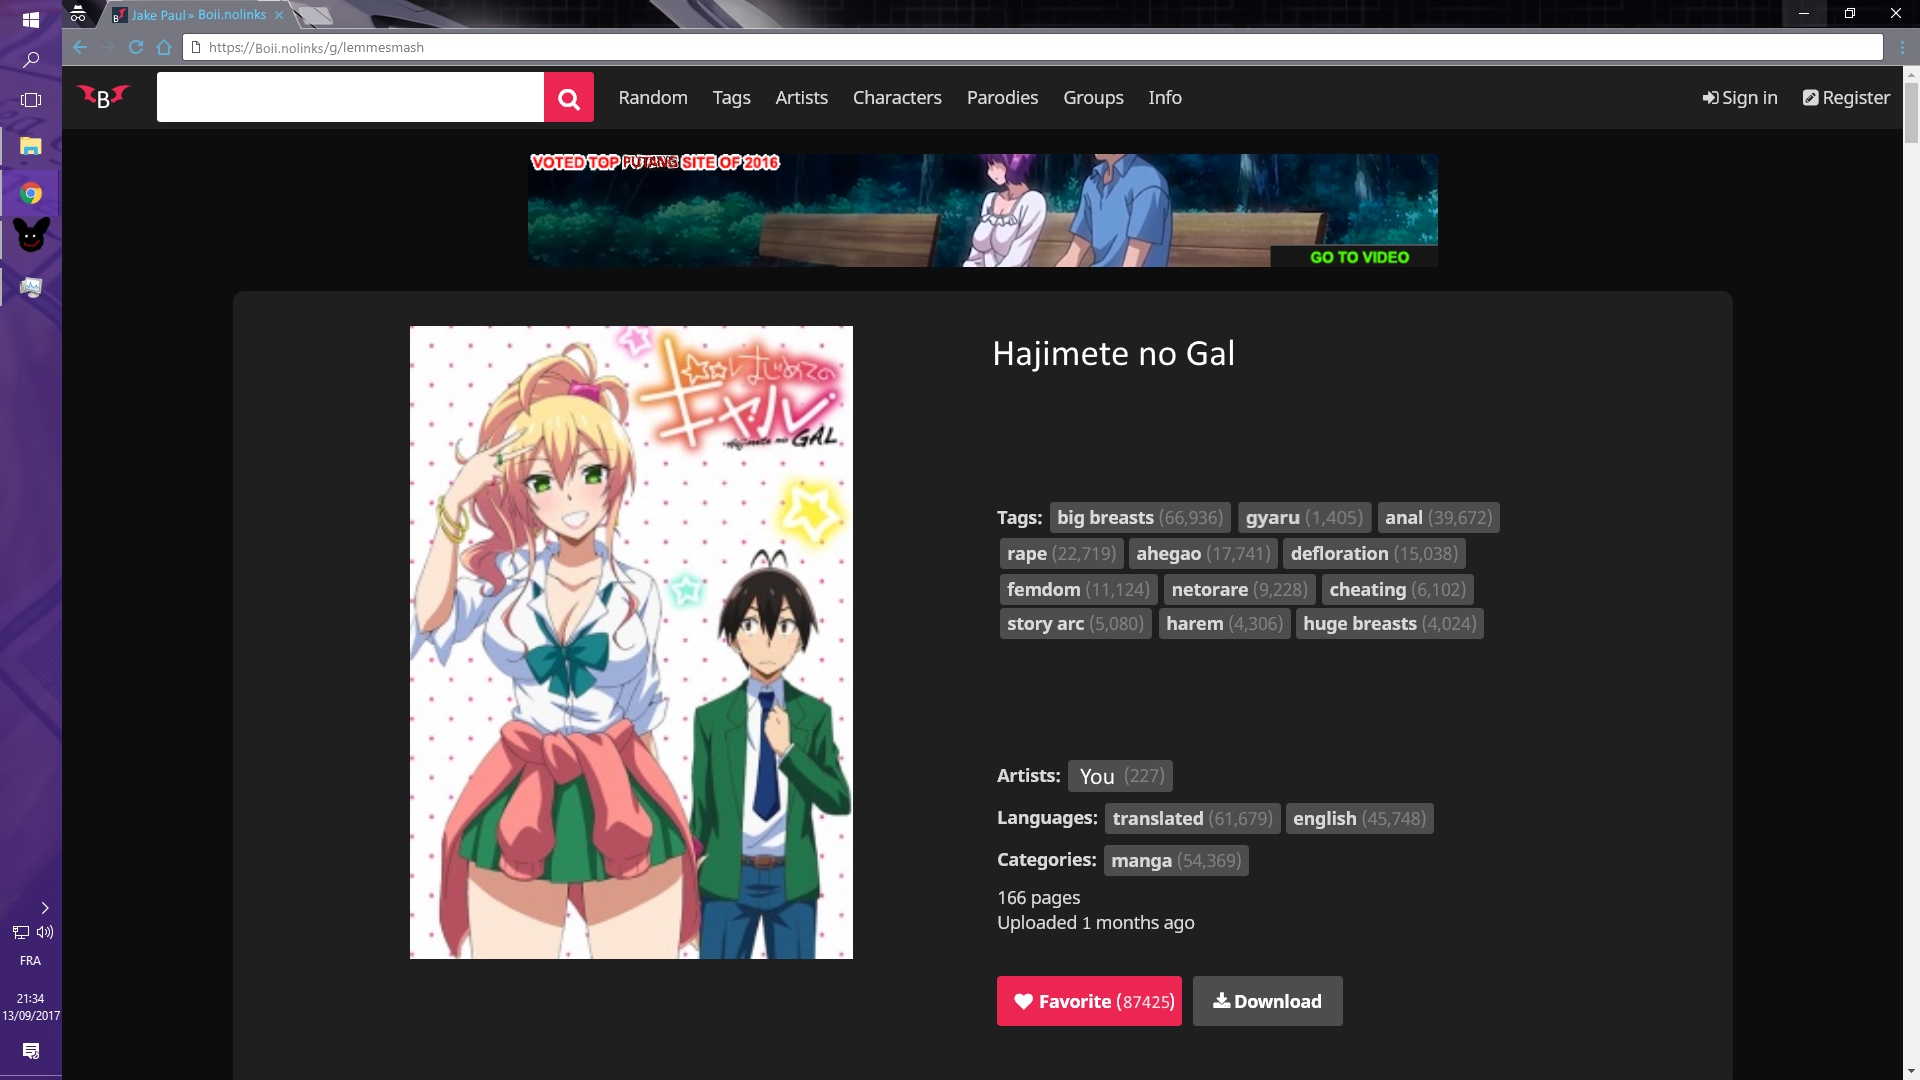 Review/discussion about: Hajimete no Gal